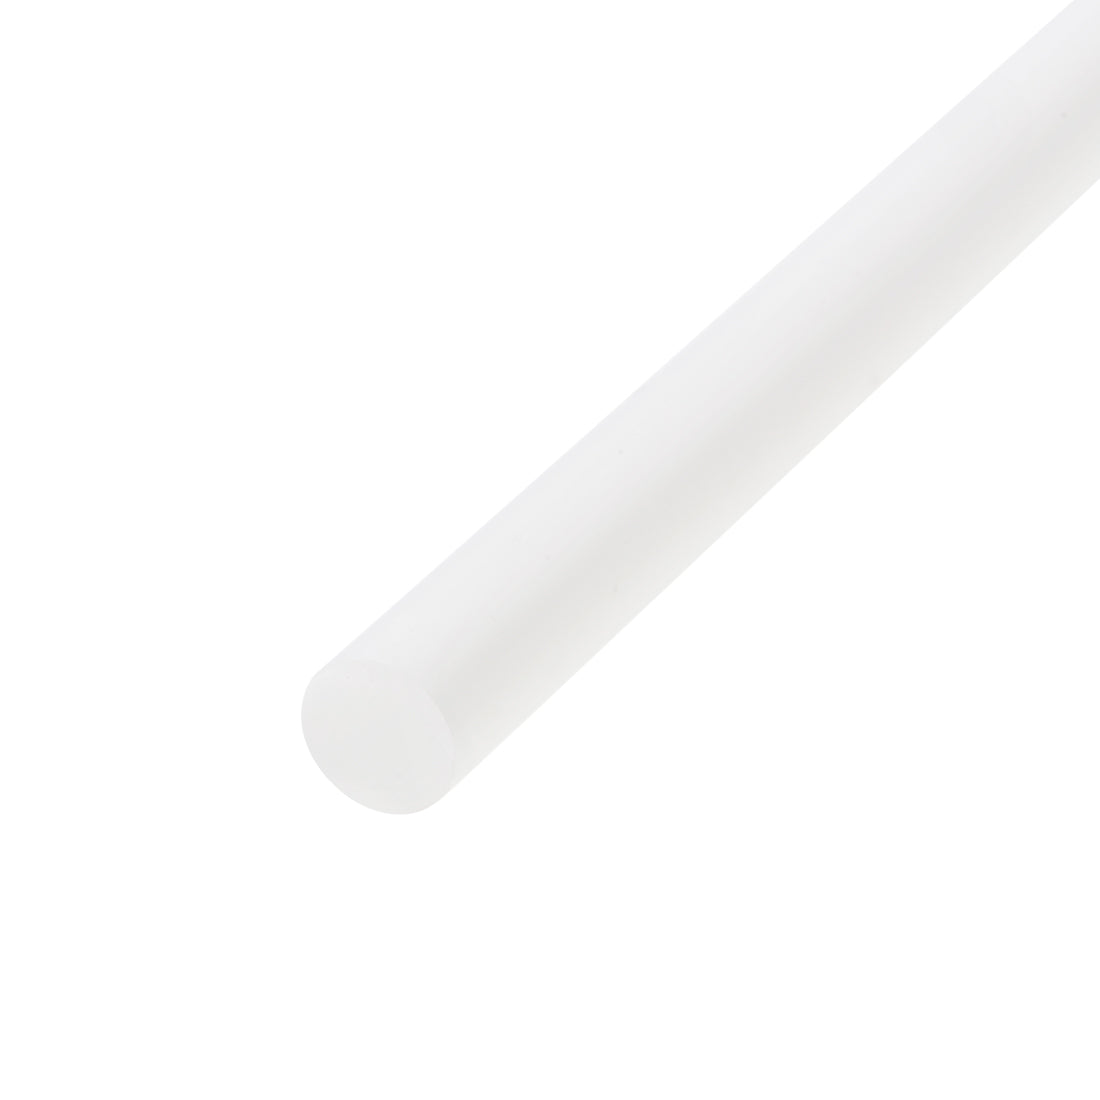 Uxcell Uxcell Mini Hot Glue Sticks for Glue Gun 0.27-inch x 4-inch White 6pcs